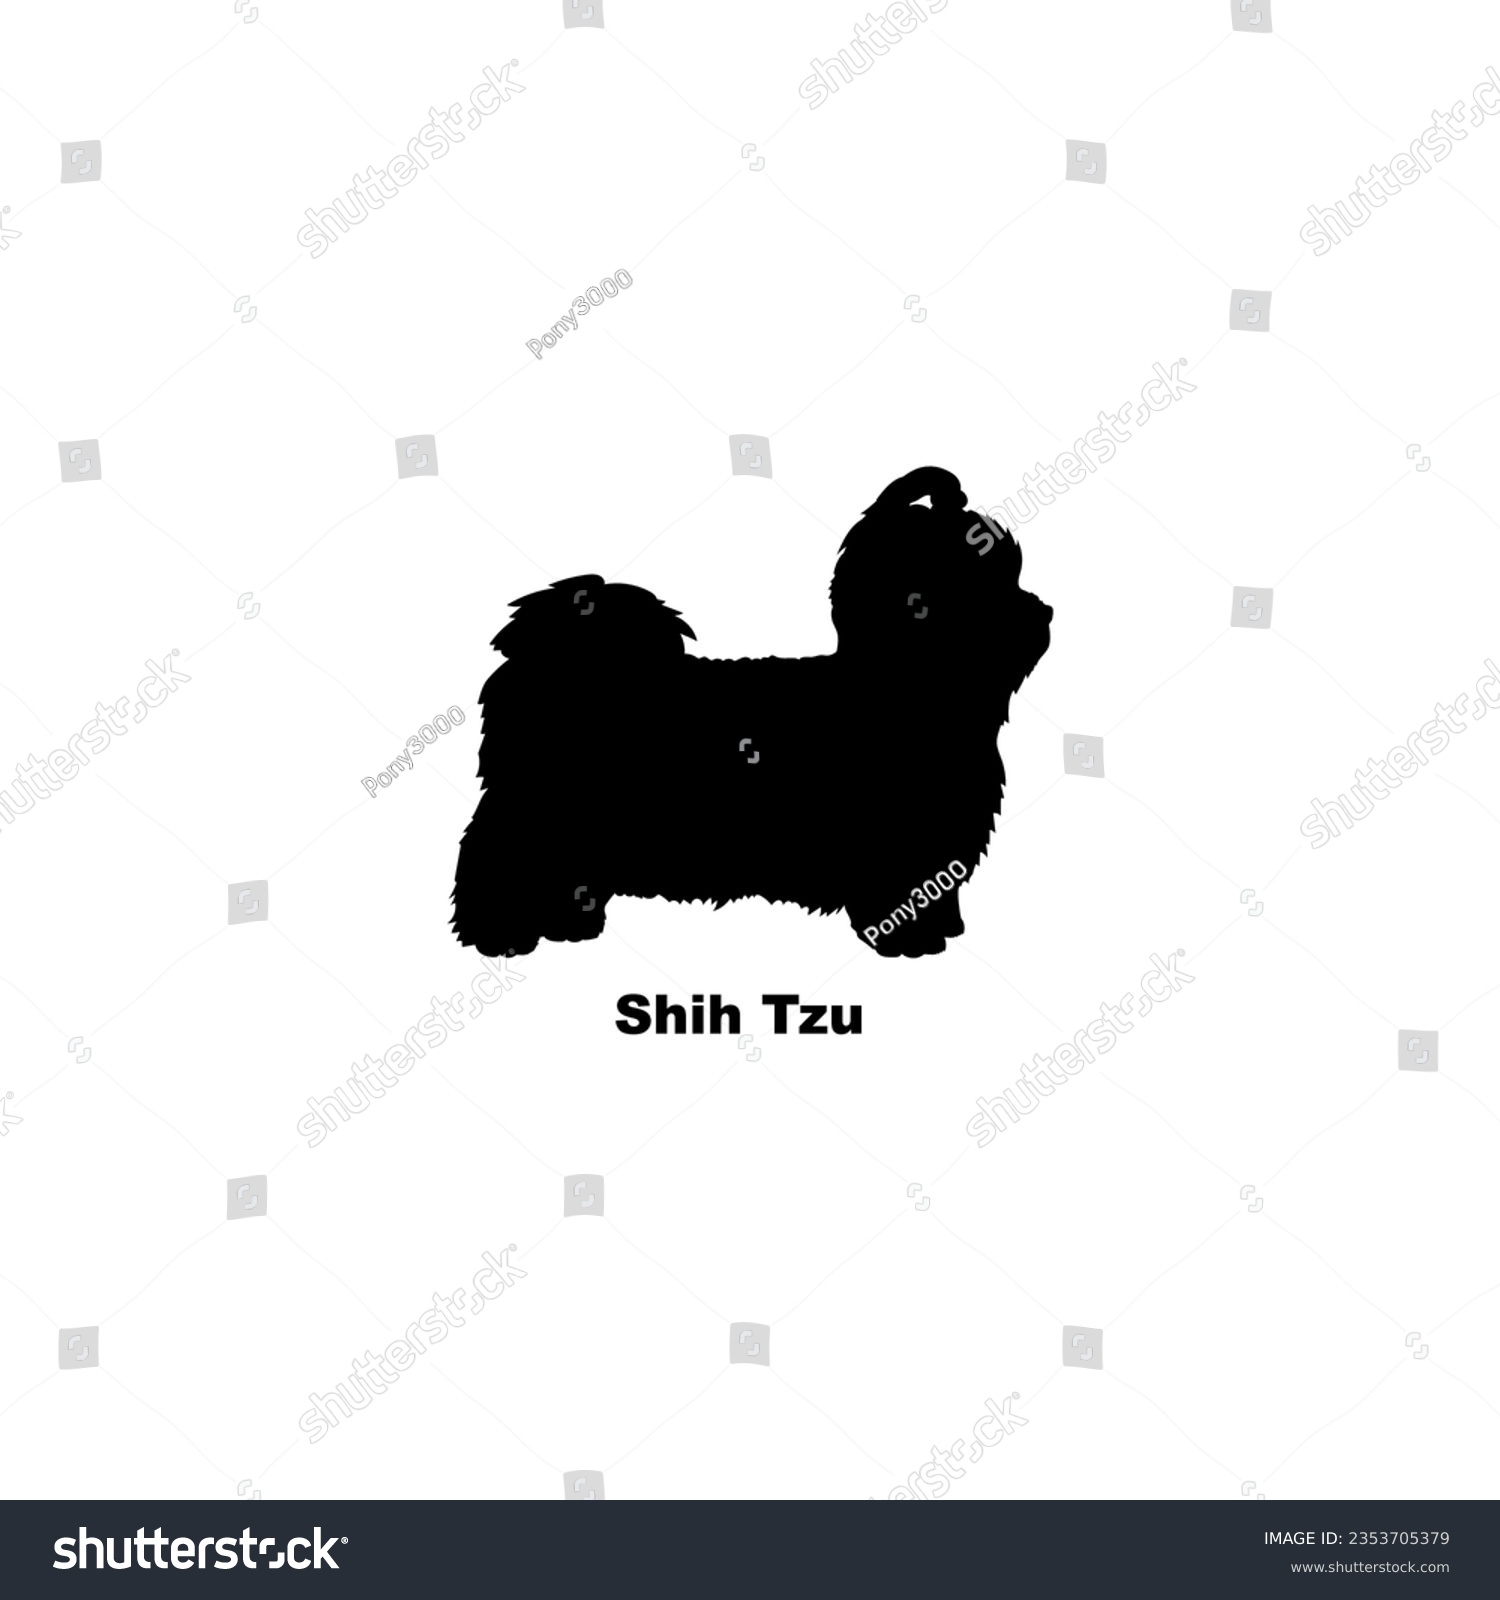 SVG of Shih Tzu dog silhouette dog breeds pet animals svg